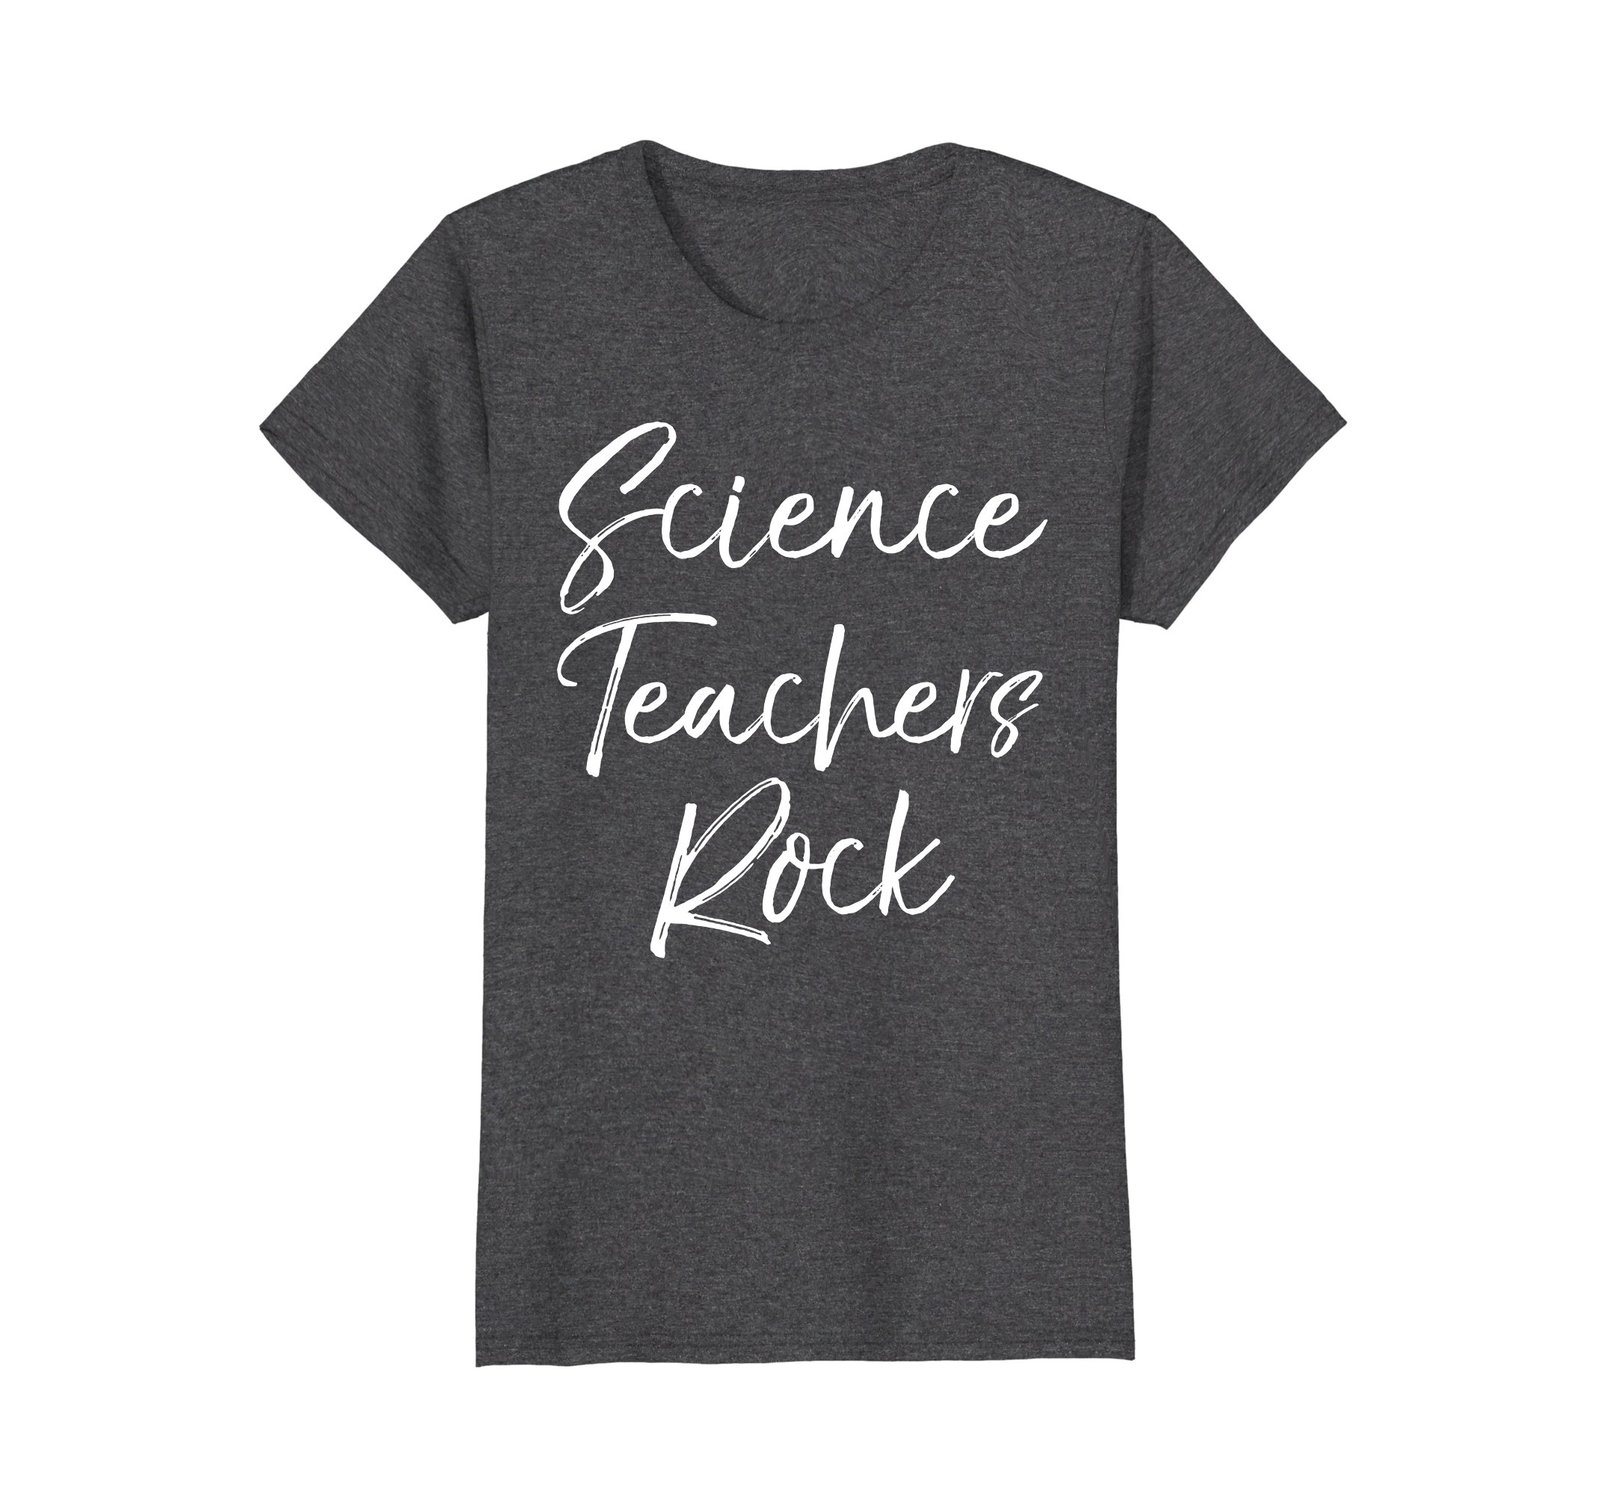 Brand New - Funny shirts - science teachers rock shirt cool teaching end of school gift wowe